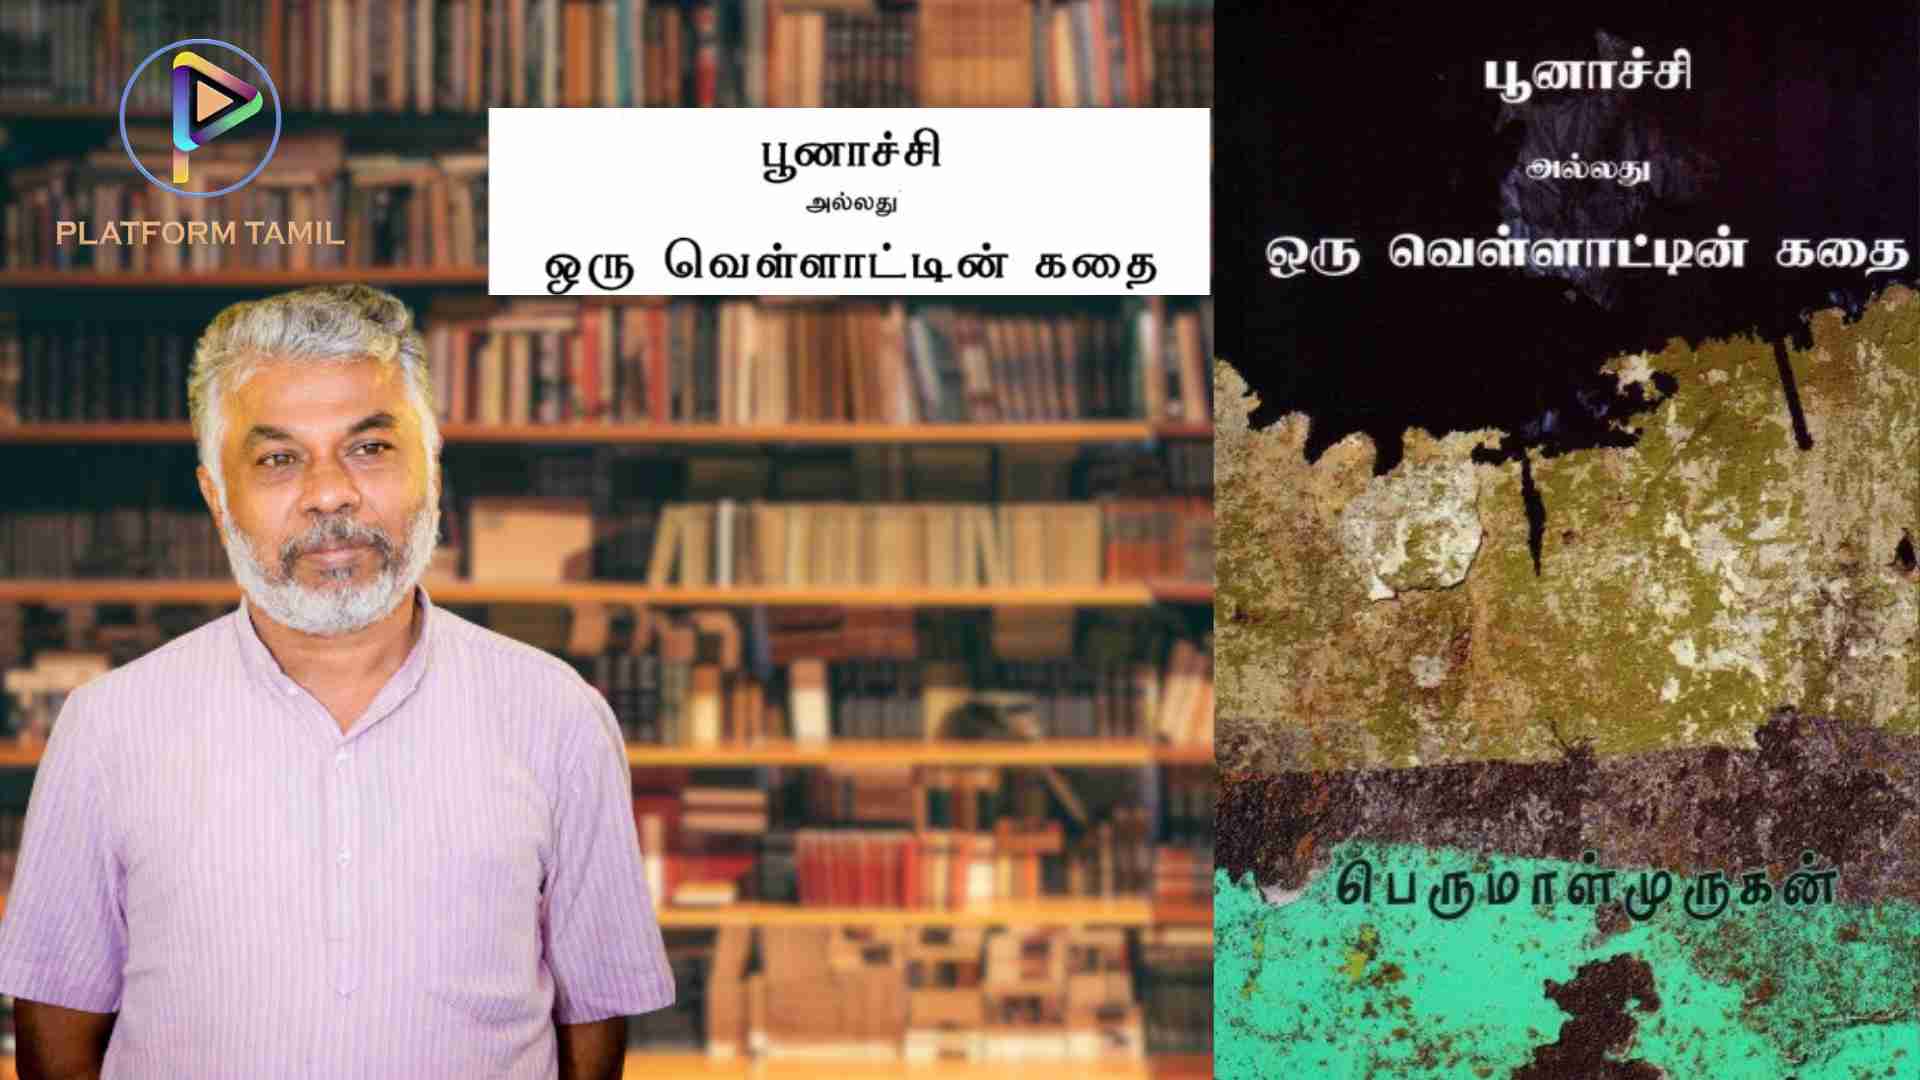 Poonaachi Allathu Oru Vellatin Kathai - Platform Tamil